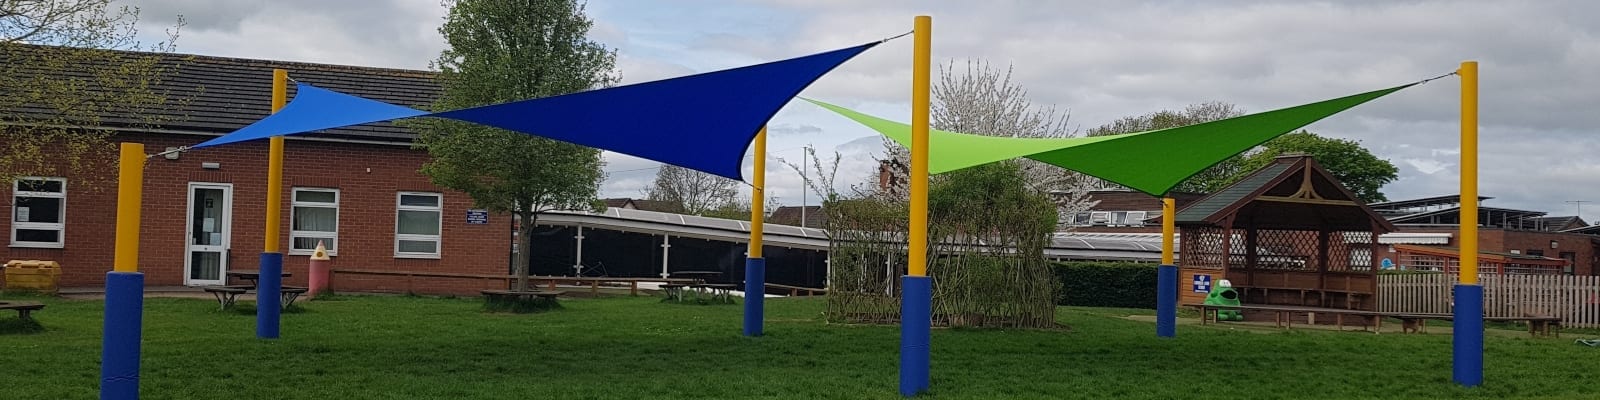 Wistaston Church Lane Academy Fabric Canopies